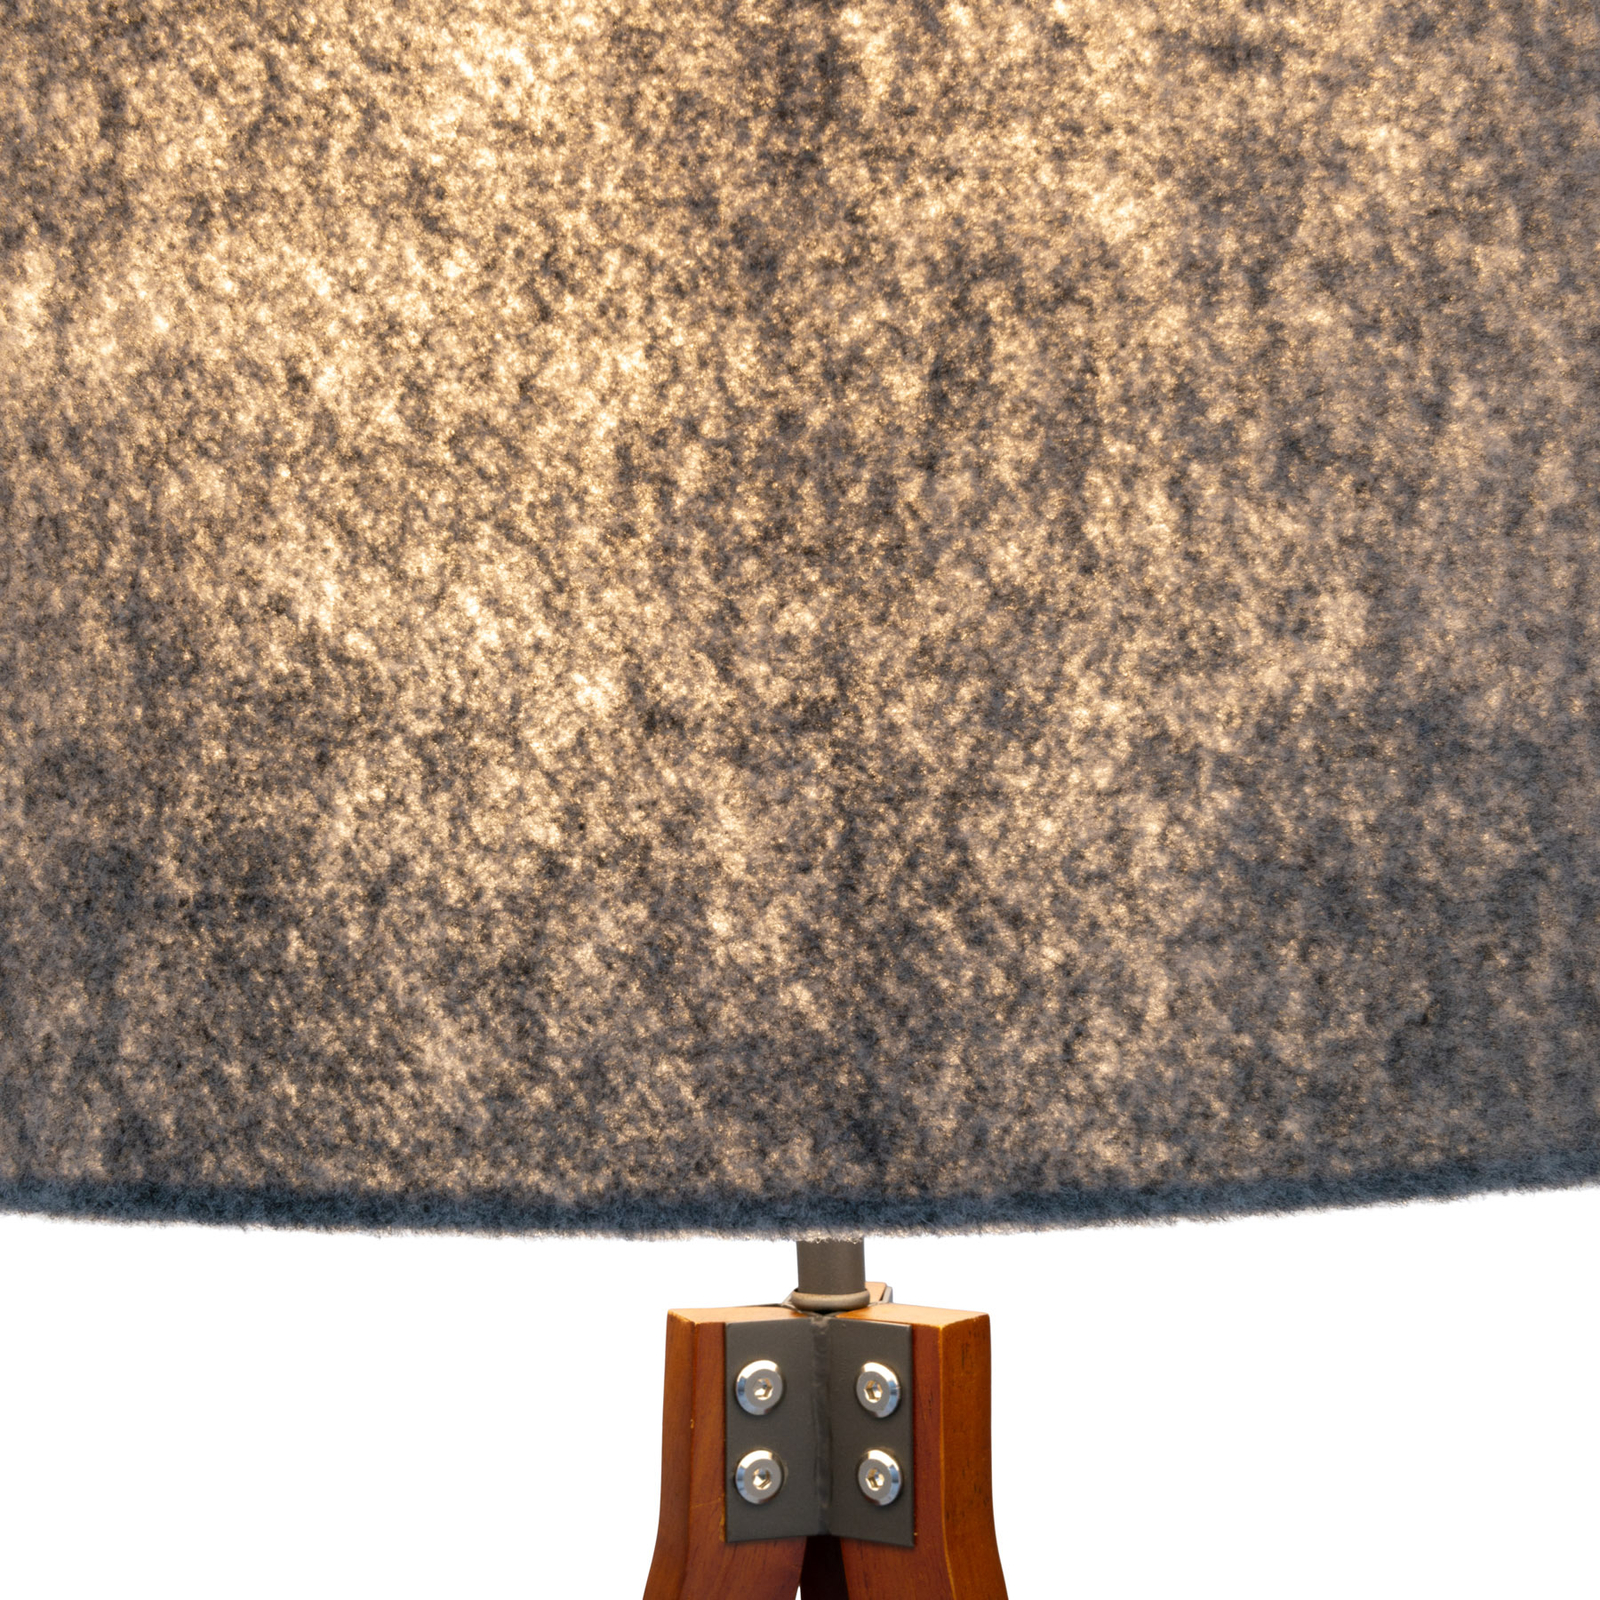 2072528 floor lamp, wooden tripod, fabric